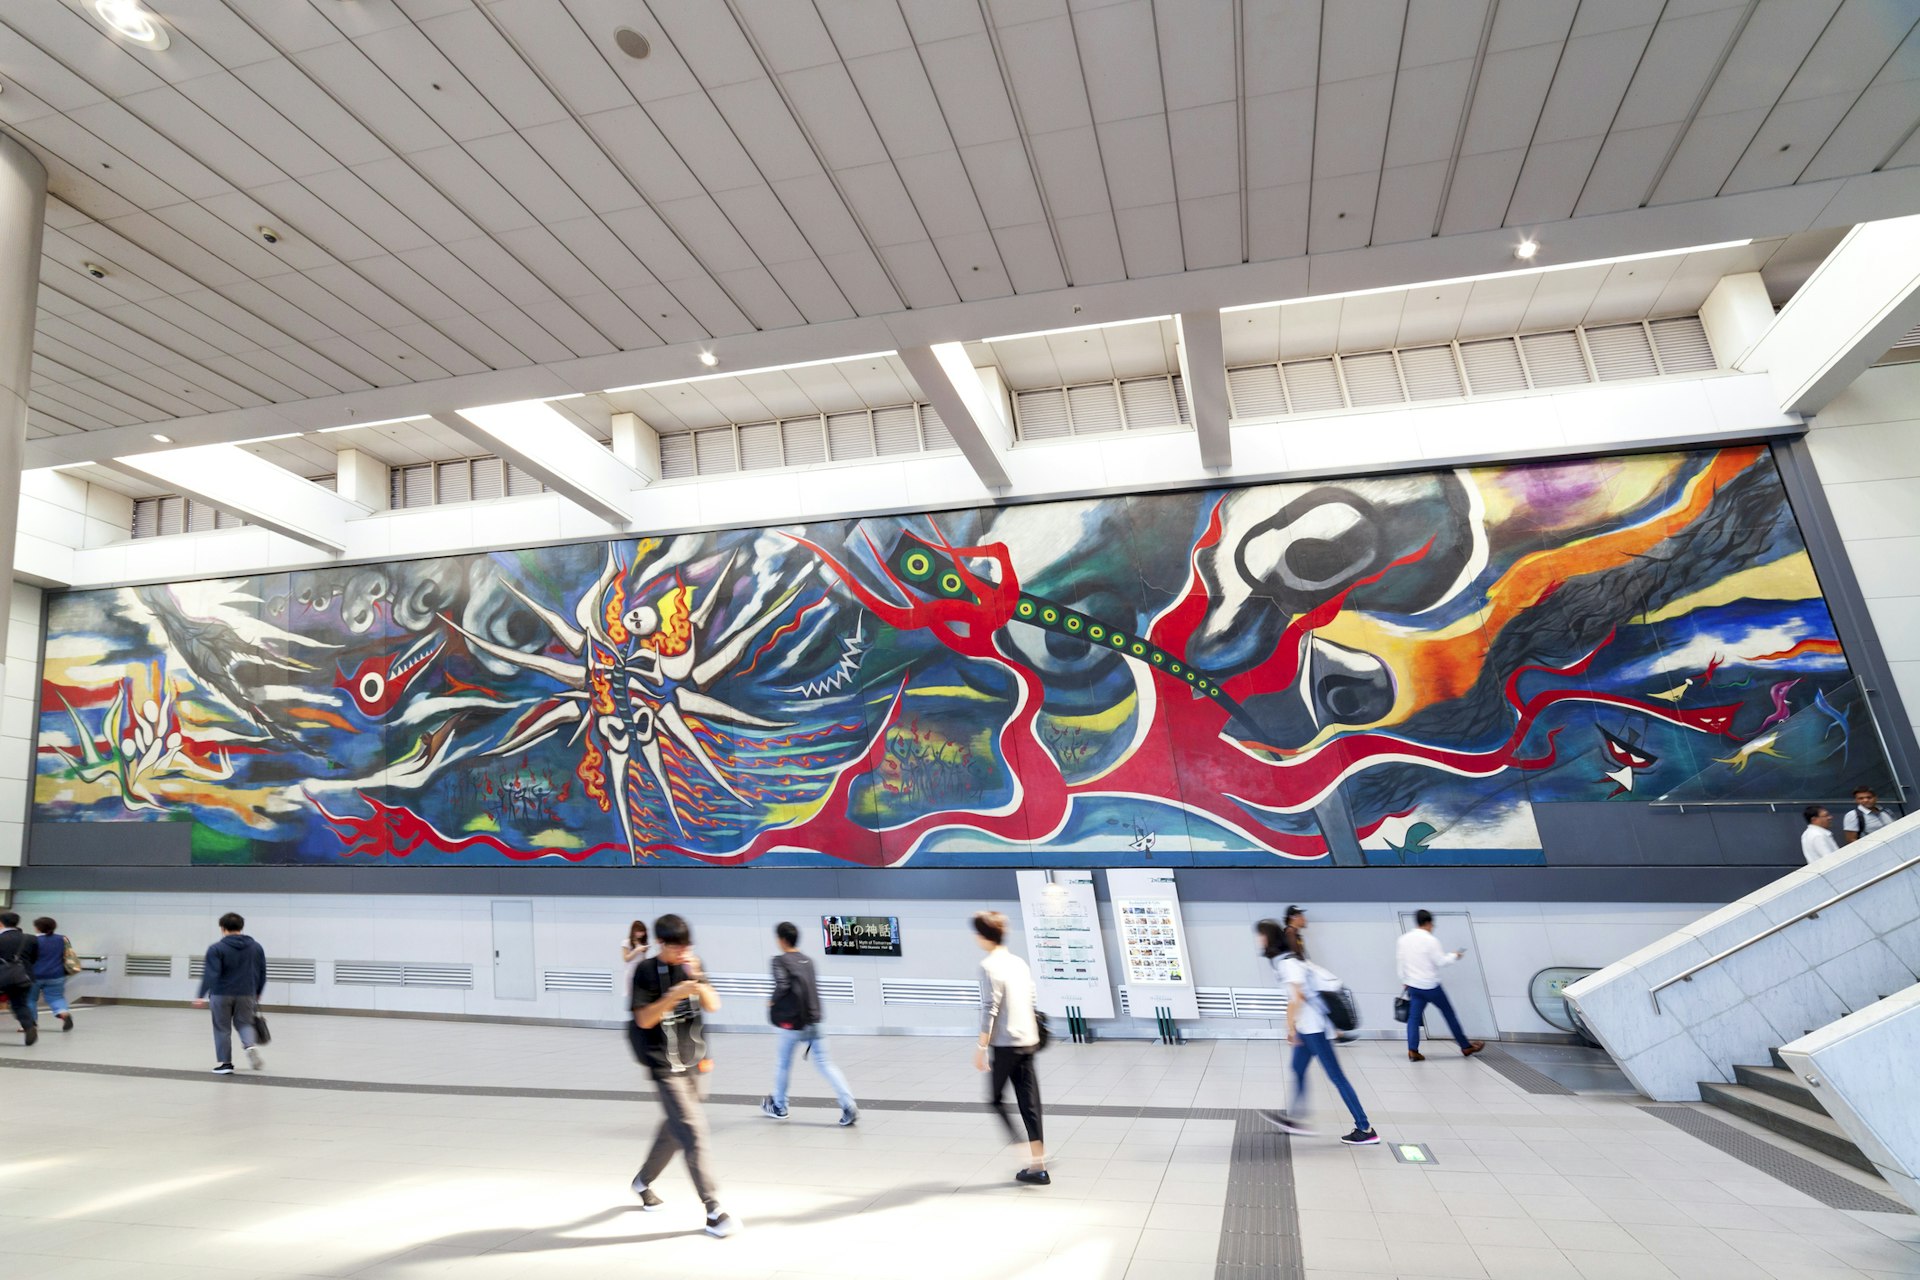 Myth of Tomorrow: Myth of Tomorrow is a wall painting painted by Taro Okamoto in Shibuya station.